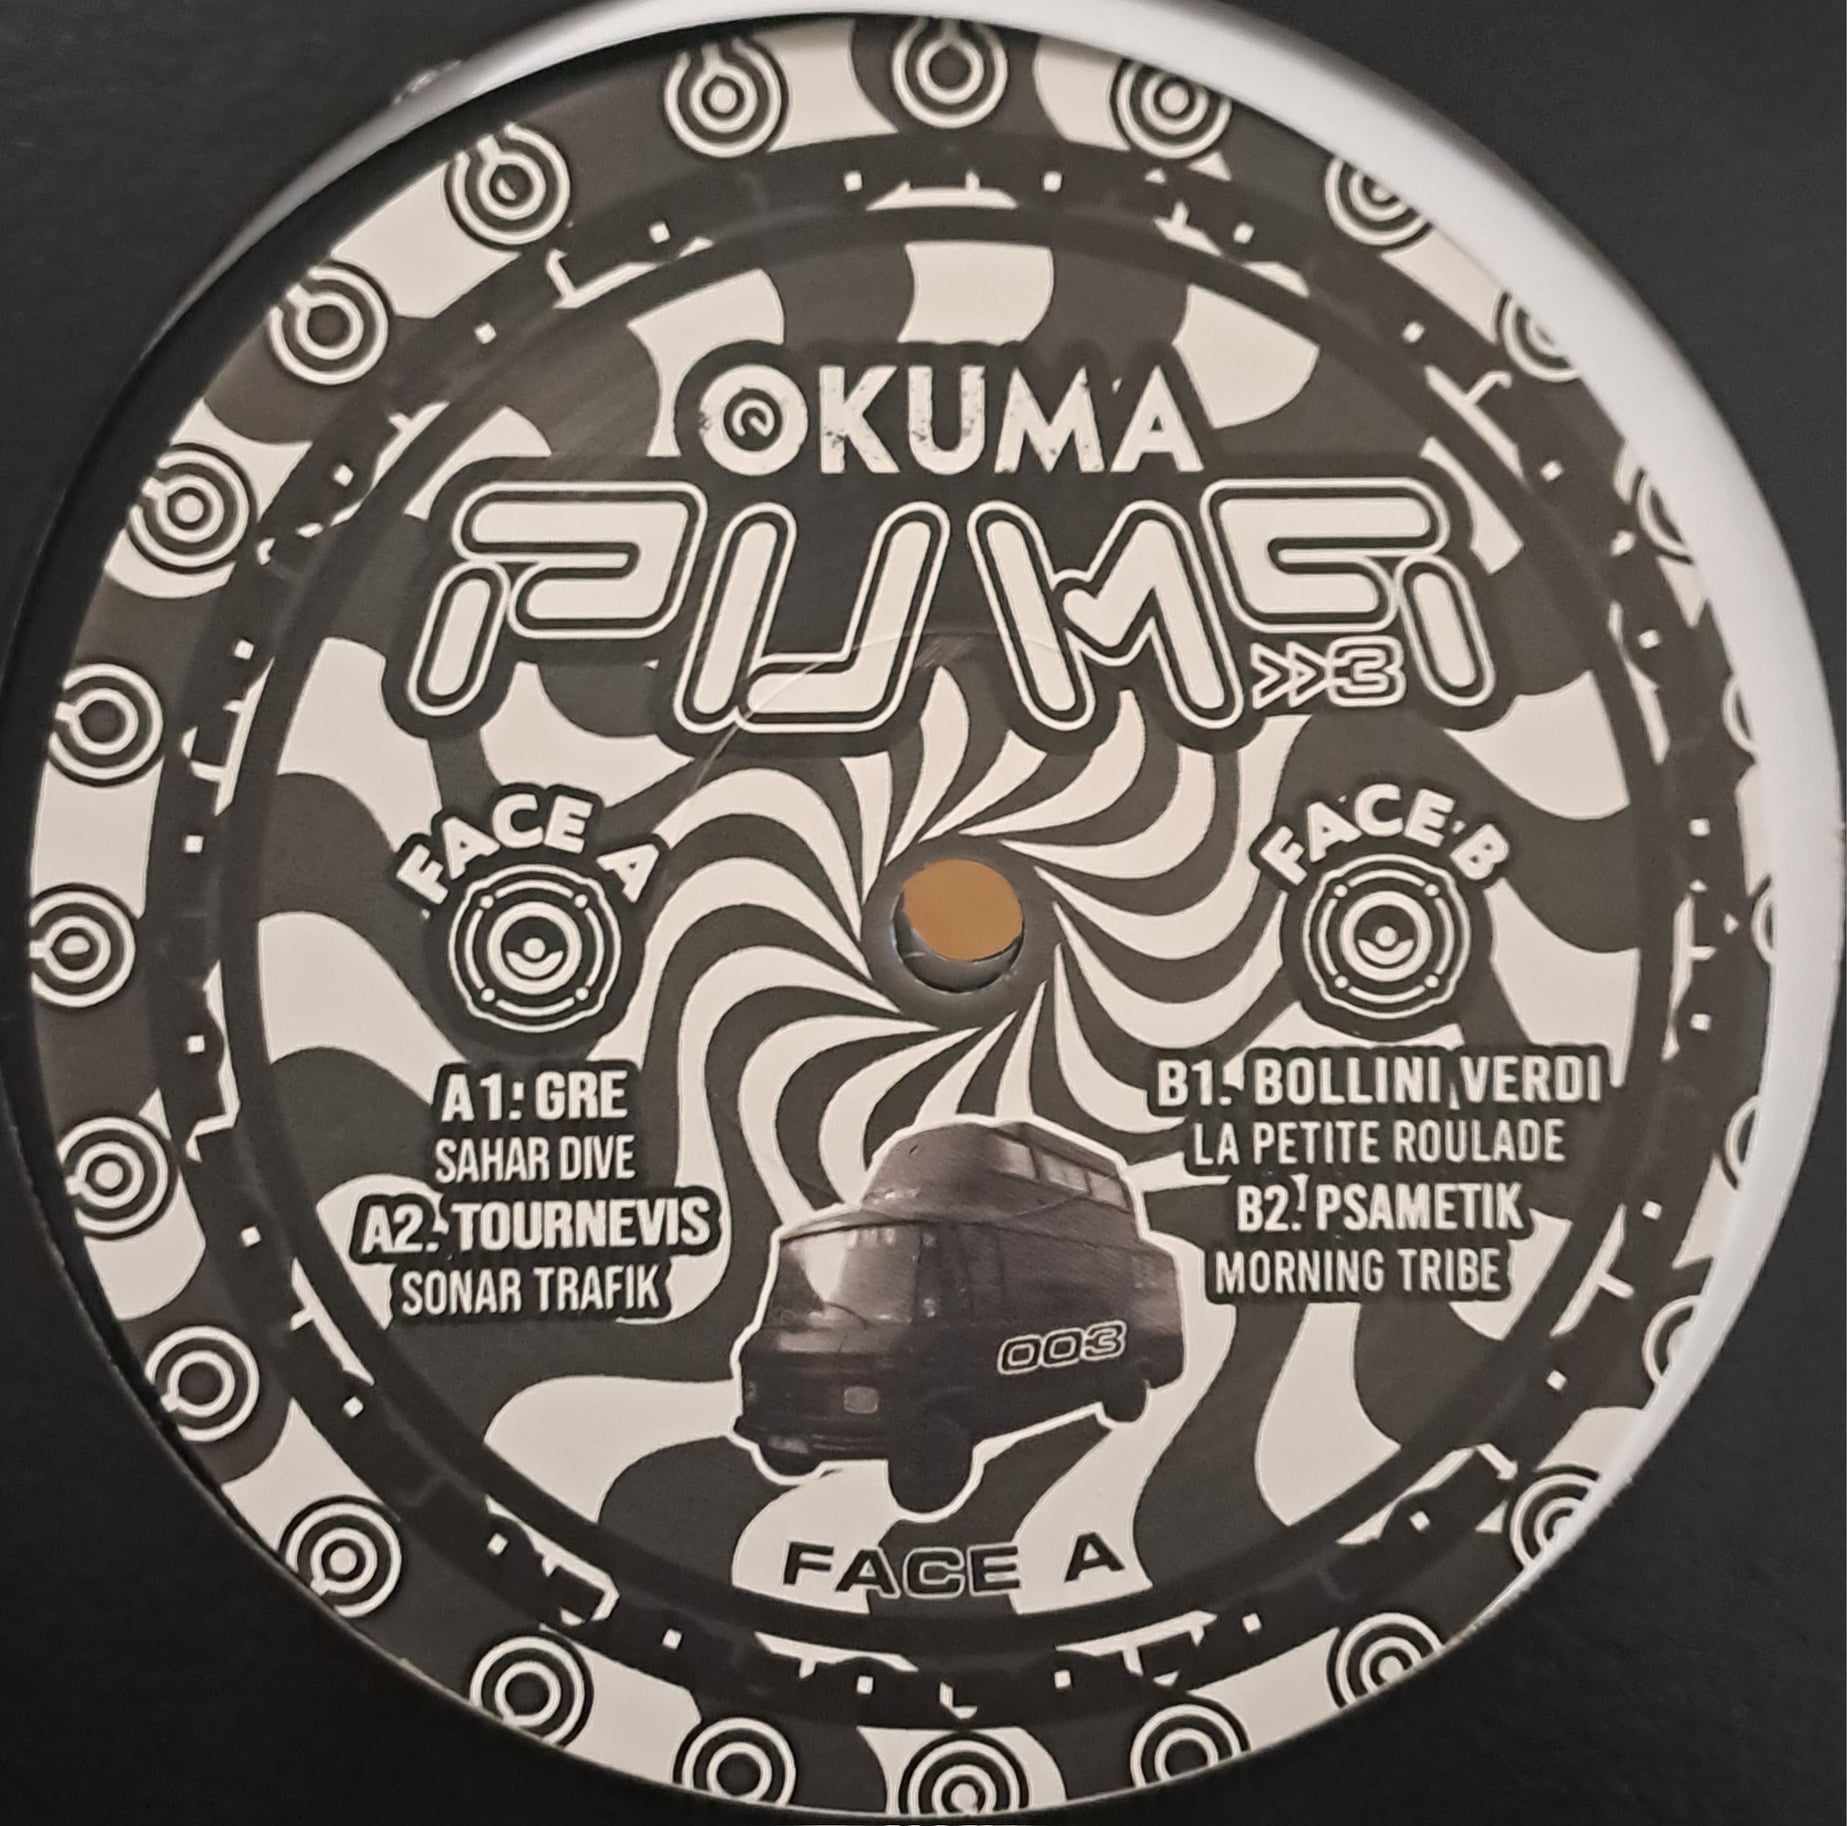 Okuma Pump 03 (double album) - vinyle freetekno